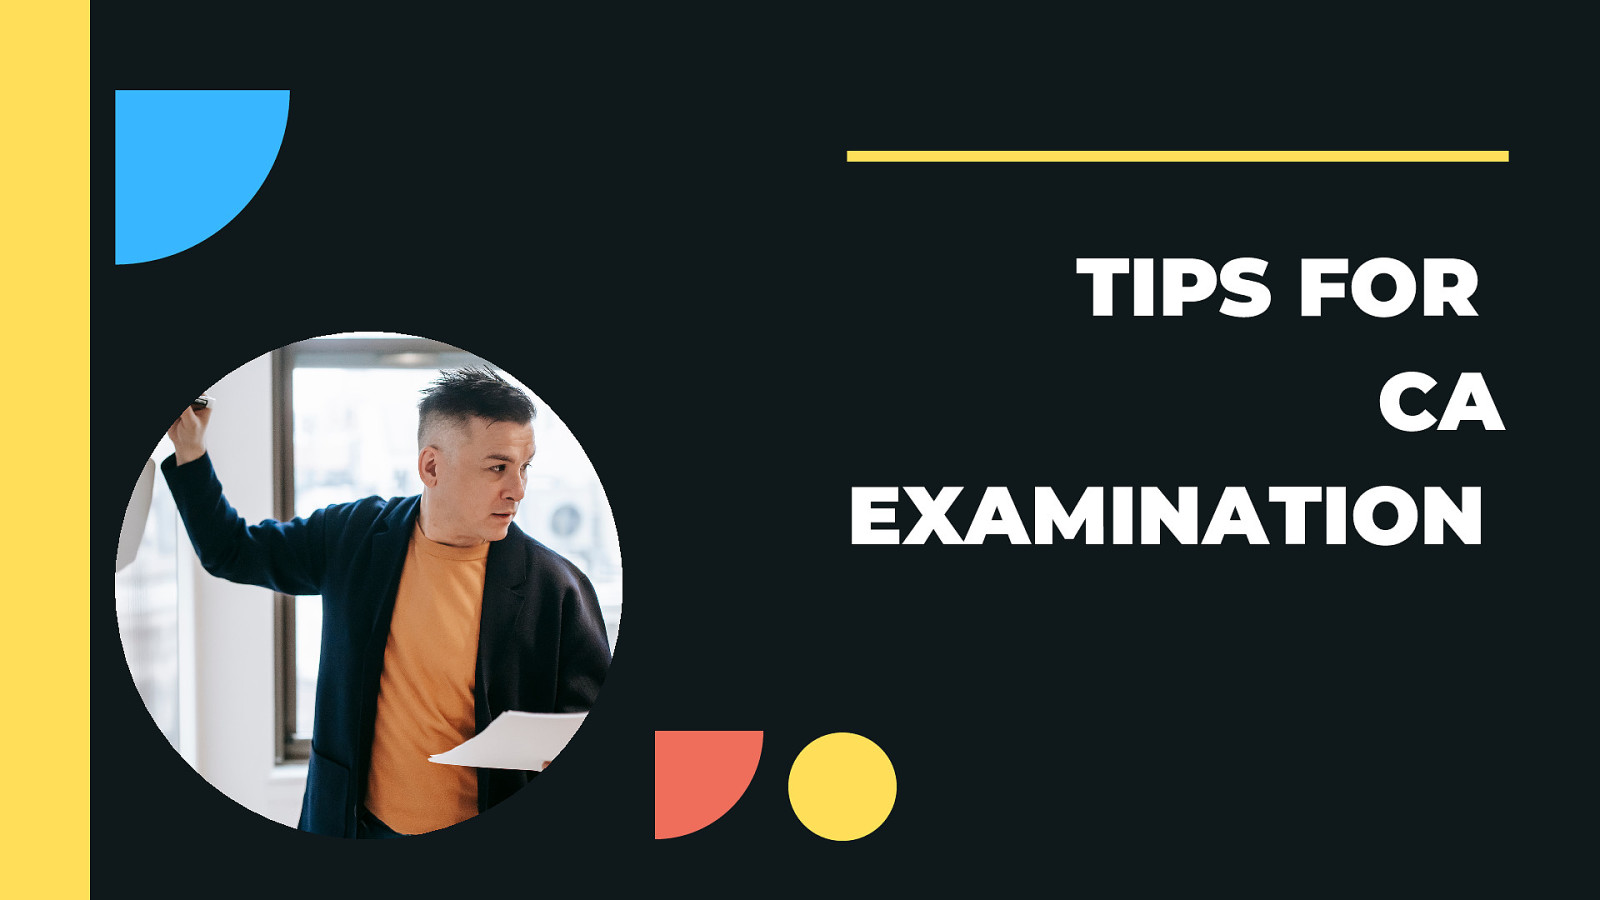 Tips for CA examination by saurabh gupta